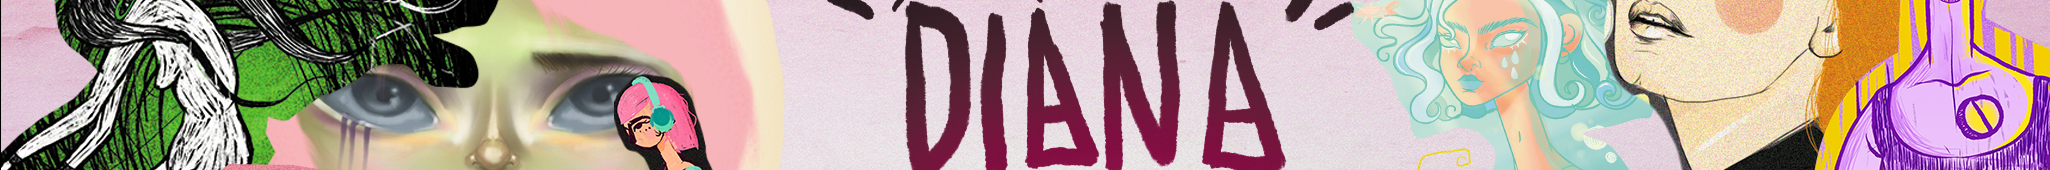 Diana Taboada's profile banner